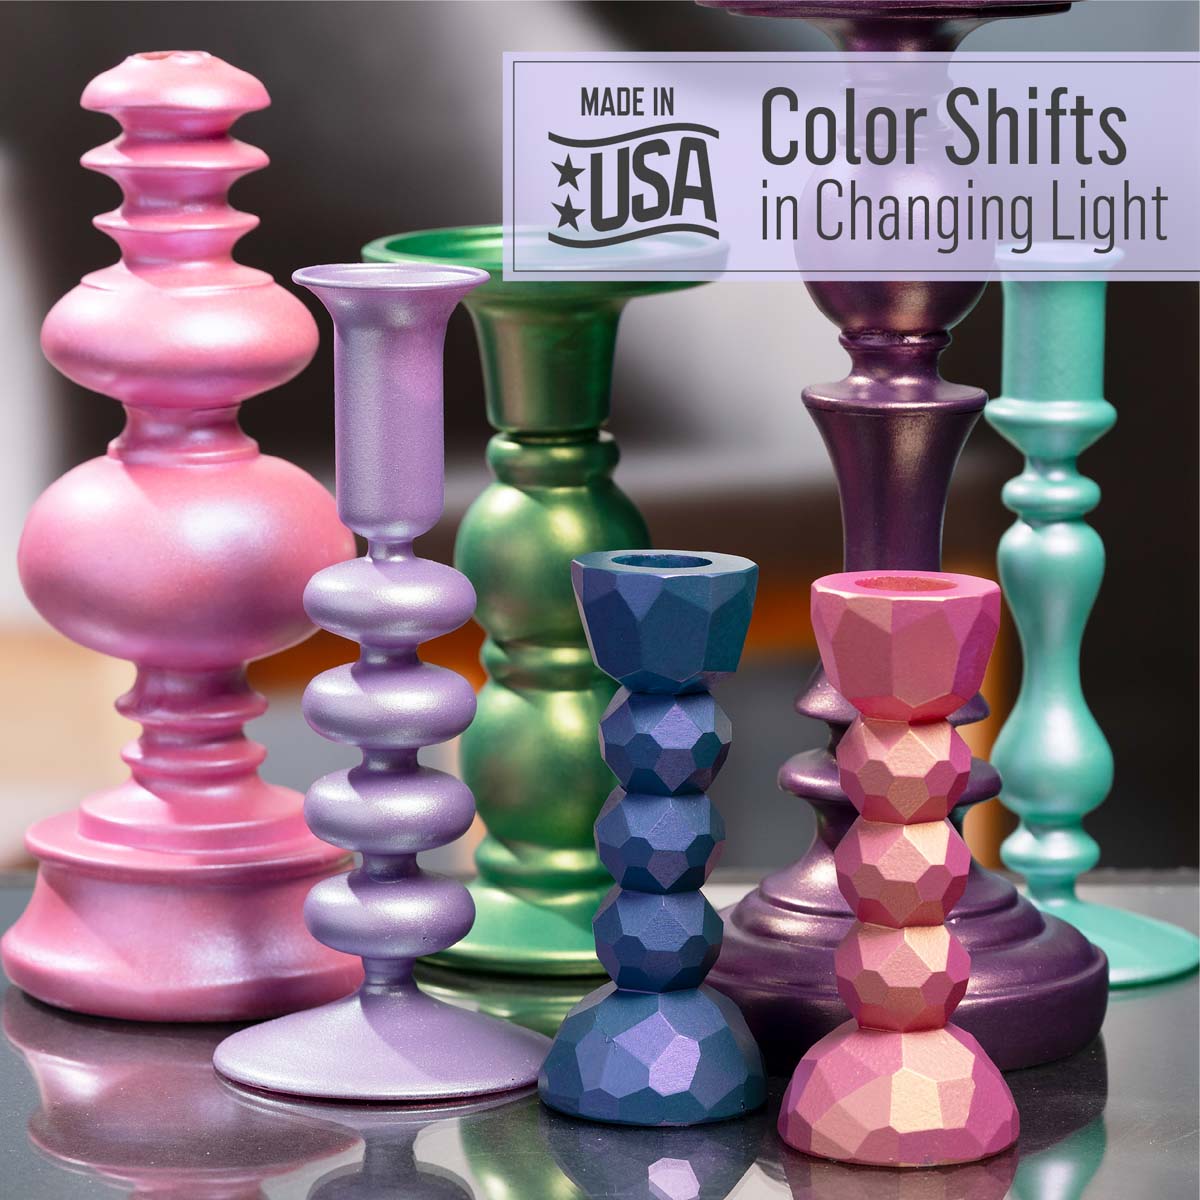 FolkArt ® Color Shift™ Acrylic Paint - Pastel Green, 4 oz. - 49914